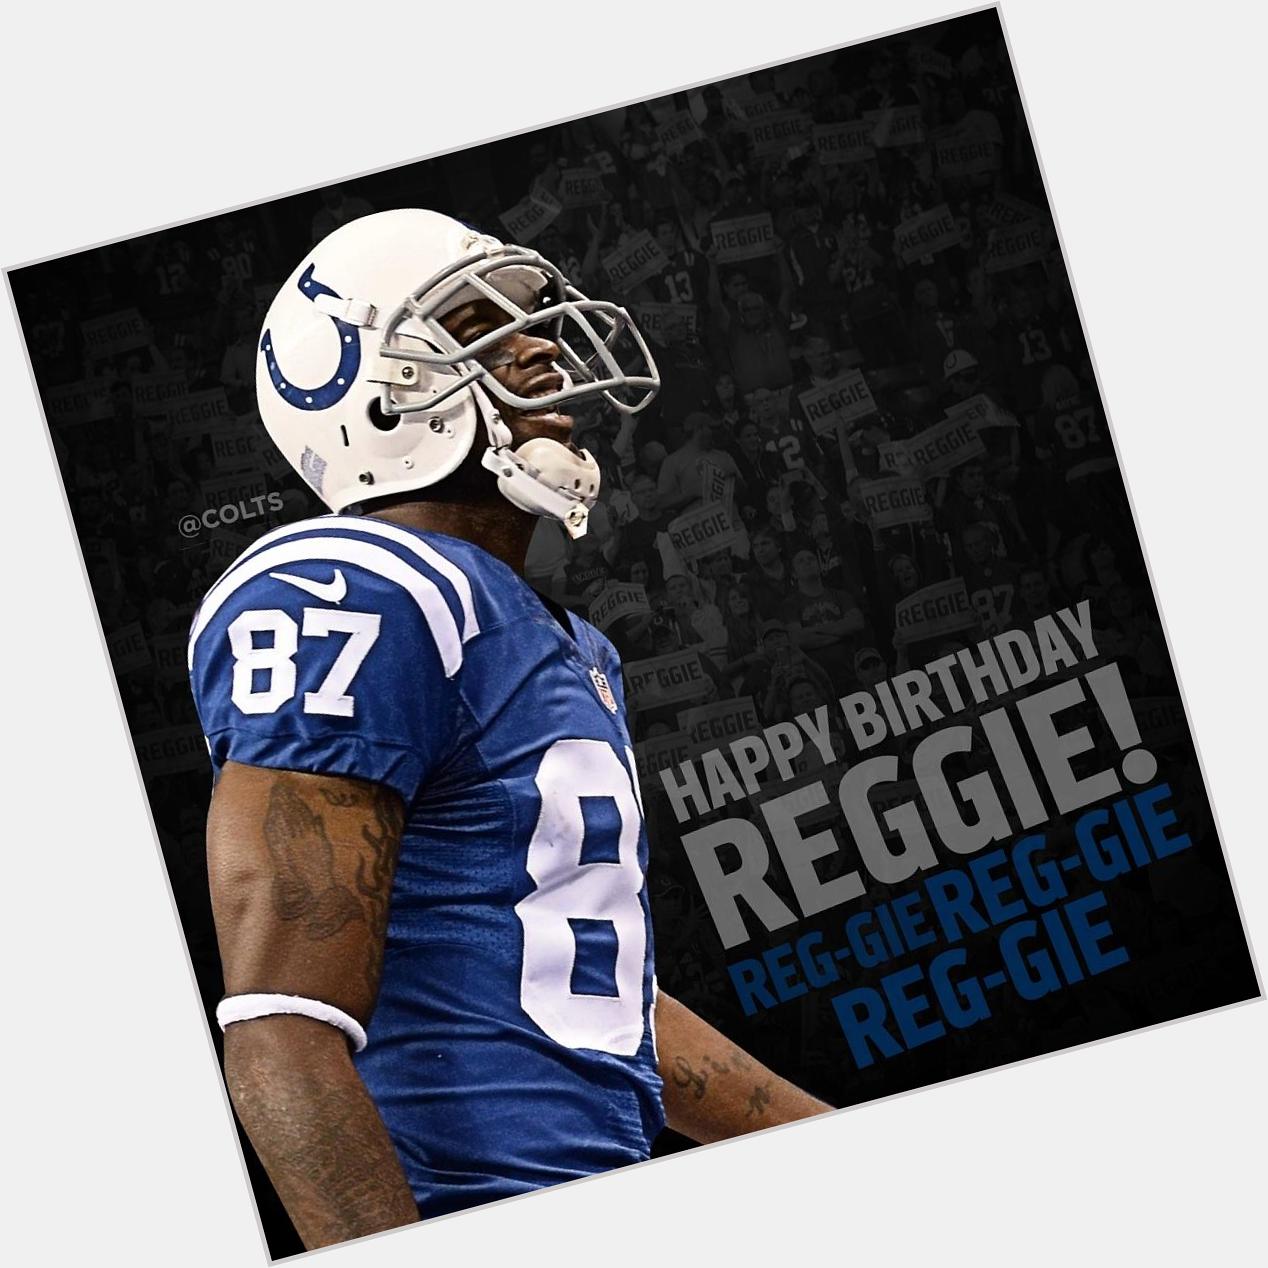 Its Reggies birthday, to wish him a Happy Birthday! 

REGGIE PHOTOS:  